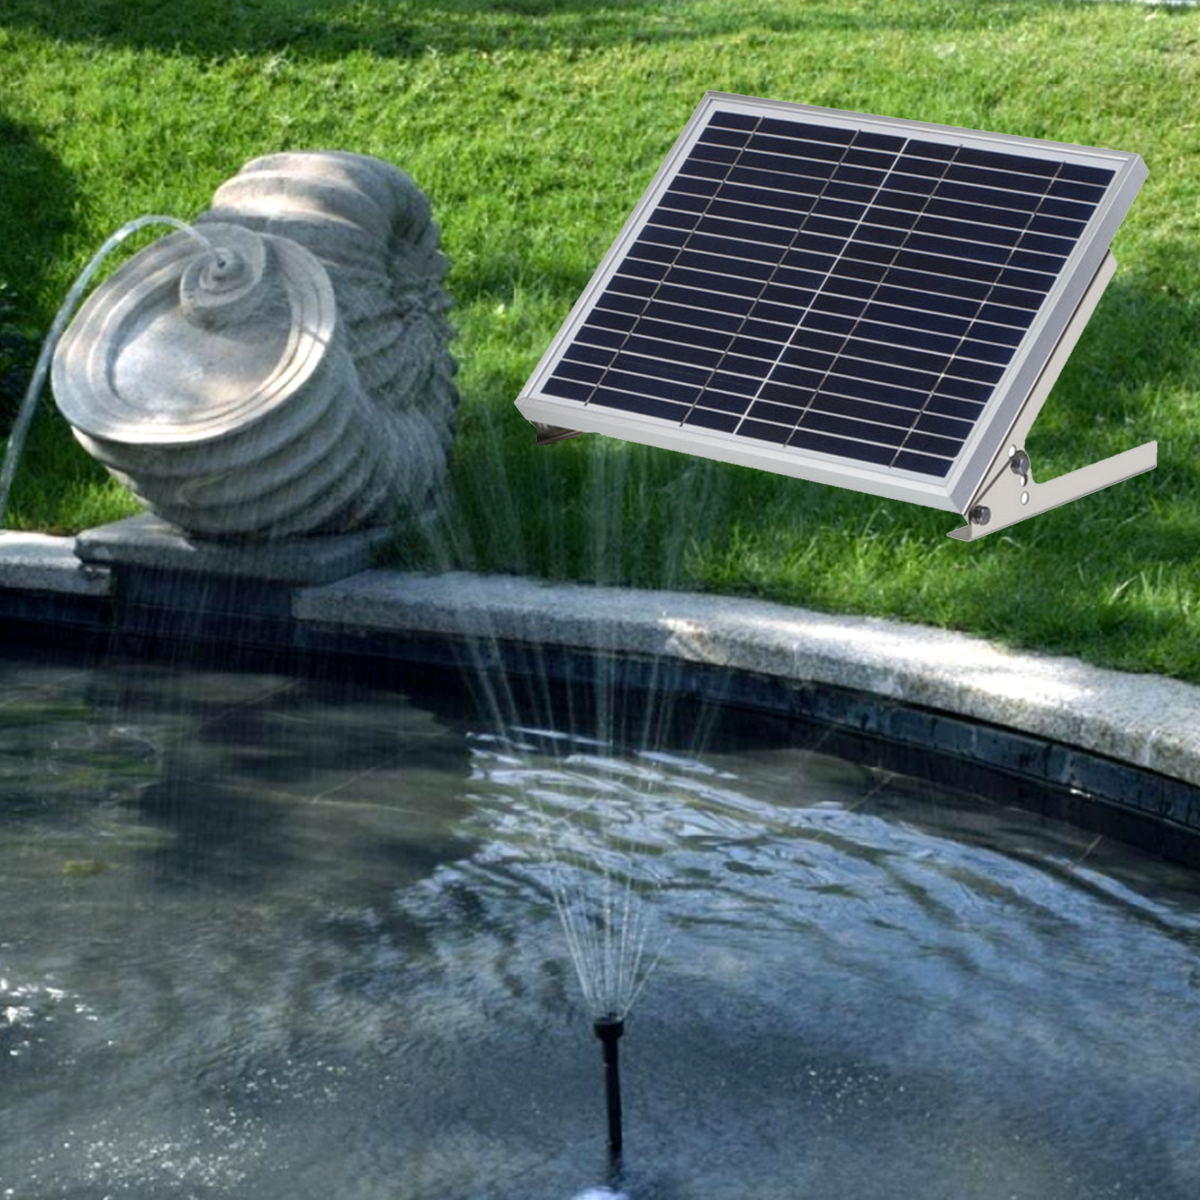 Solar-Fountain-15W-Double-Pump-Power-Storage-Remote-Control-Pond-Solar-Submersible-Water-Pump-Founta-1536030-3